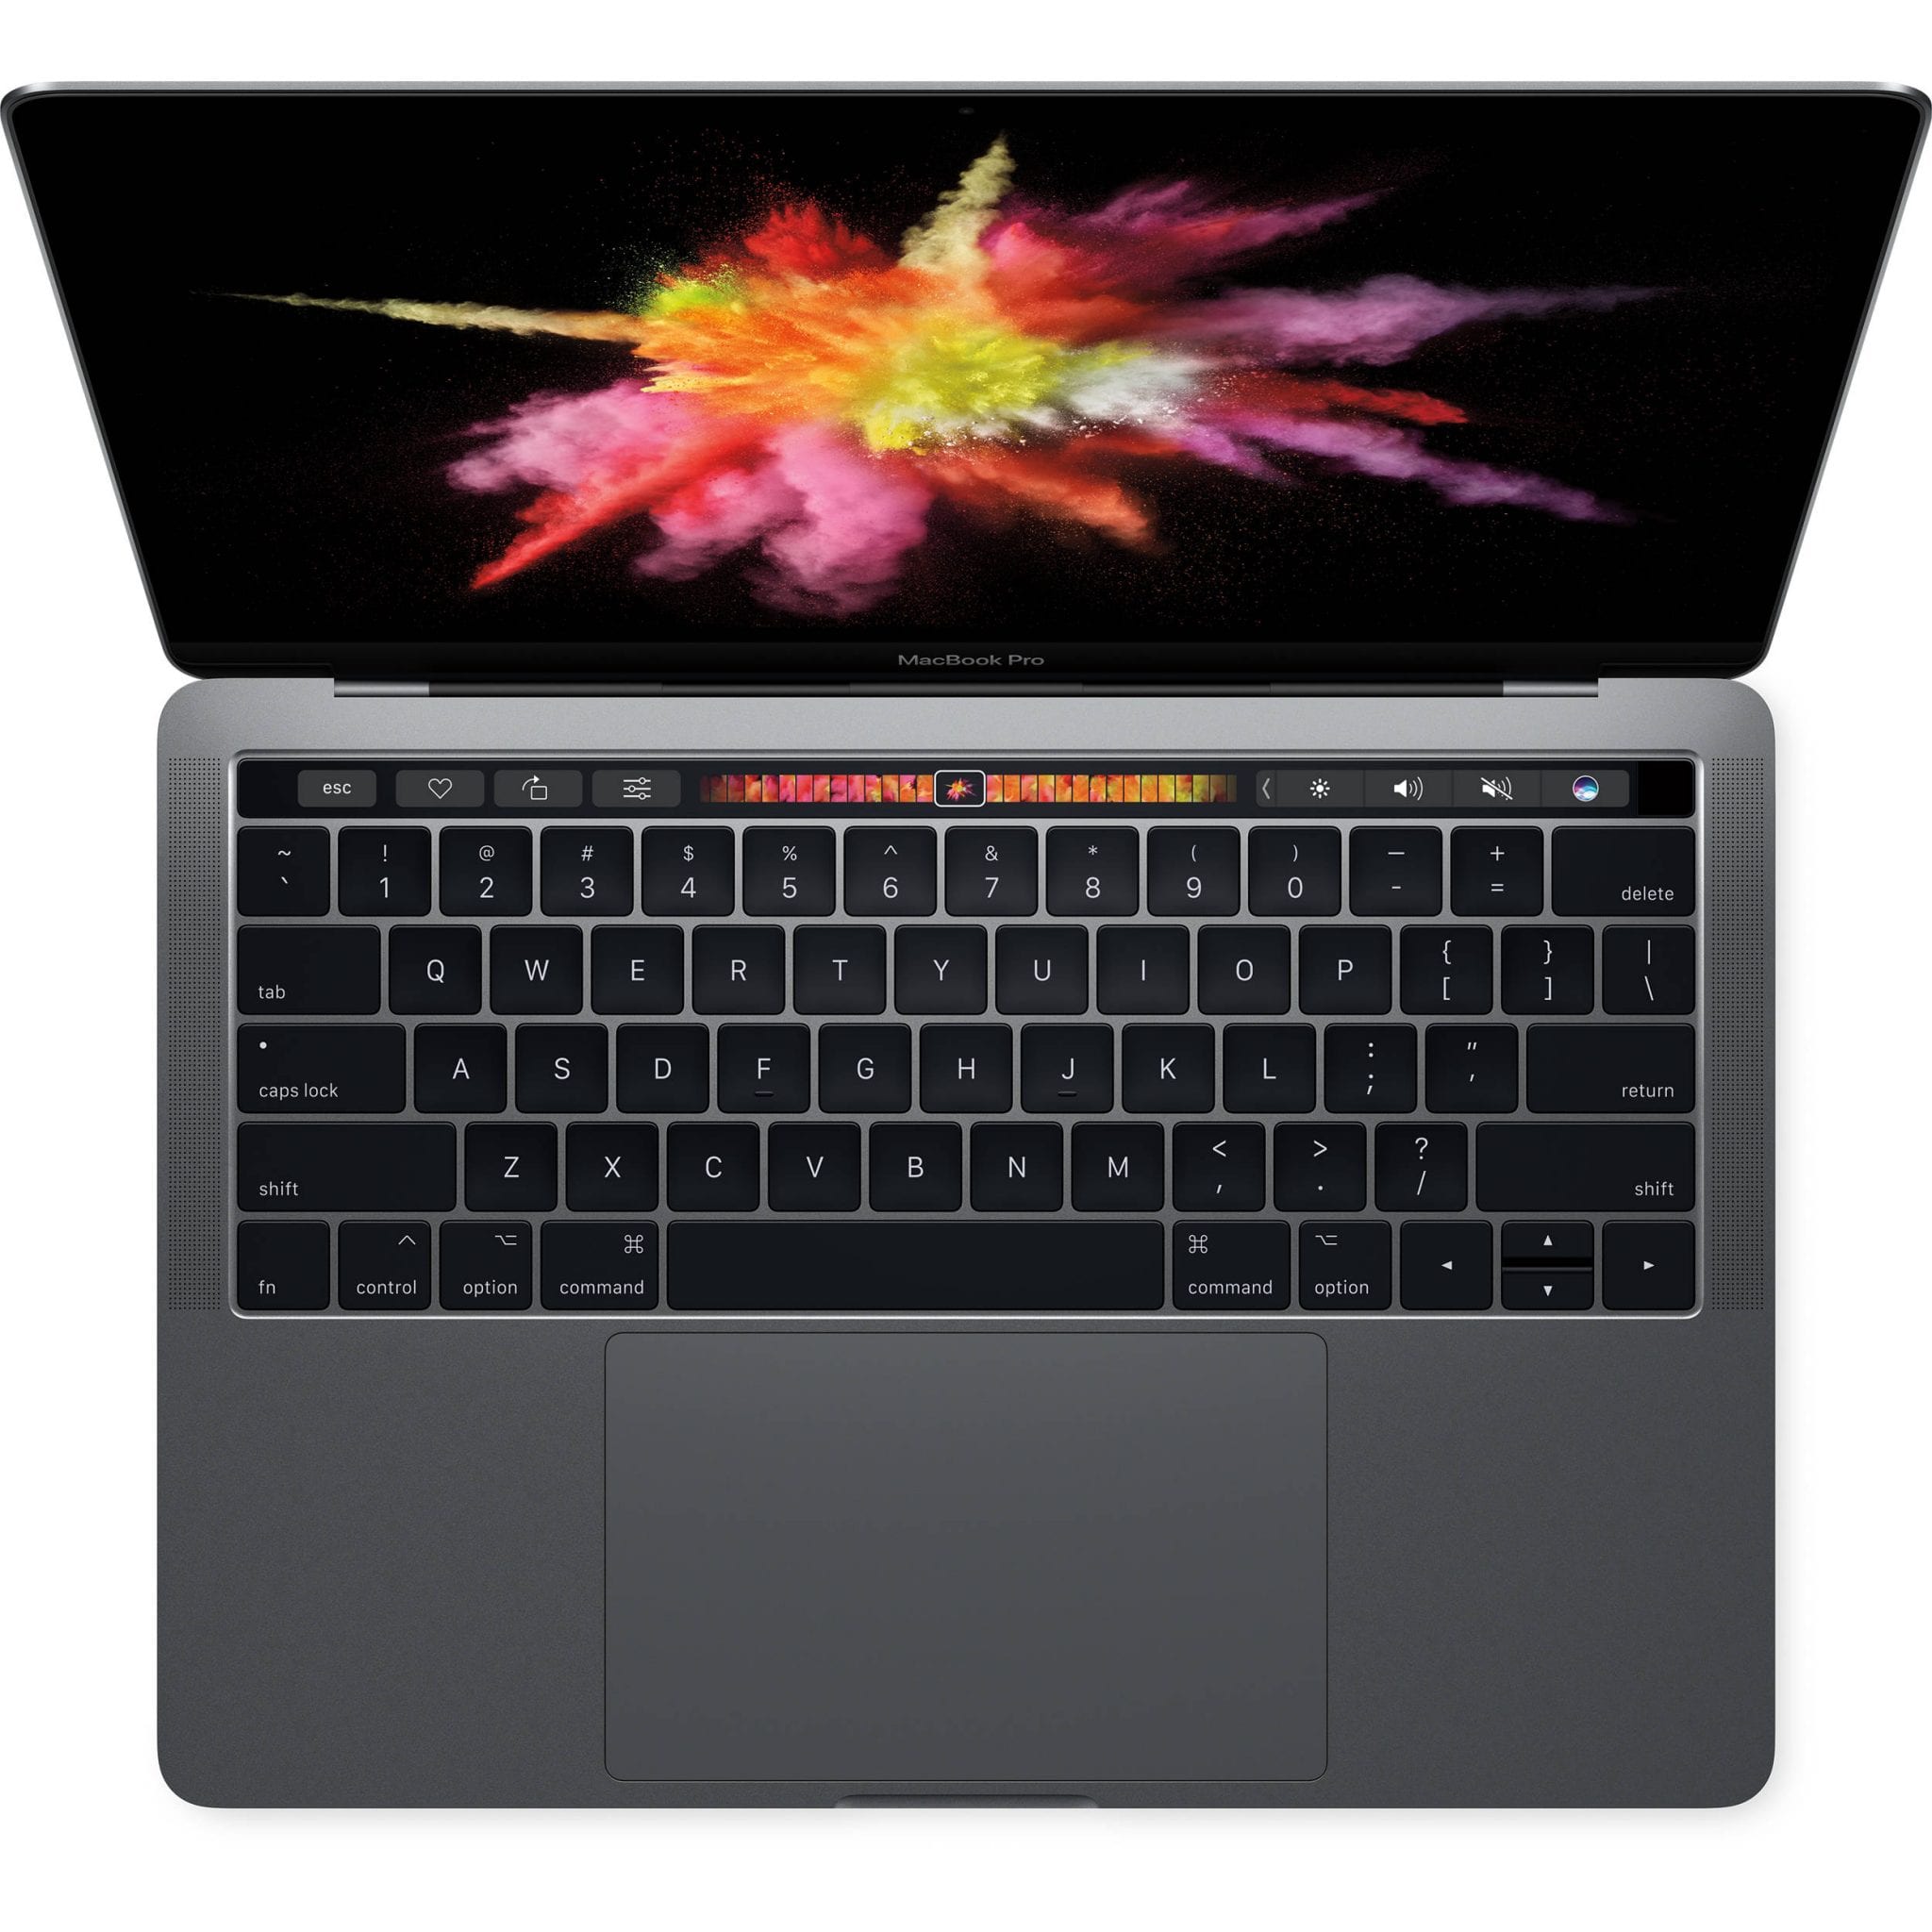 Apple MacBook Pro 13 Mid 2017 Specs touch